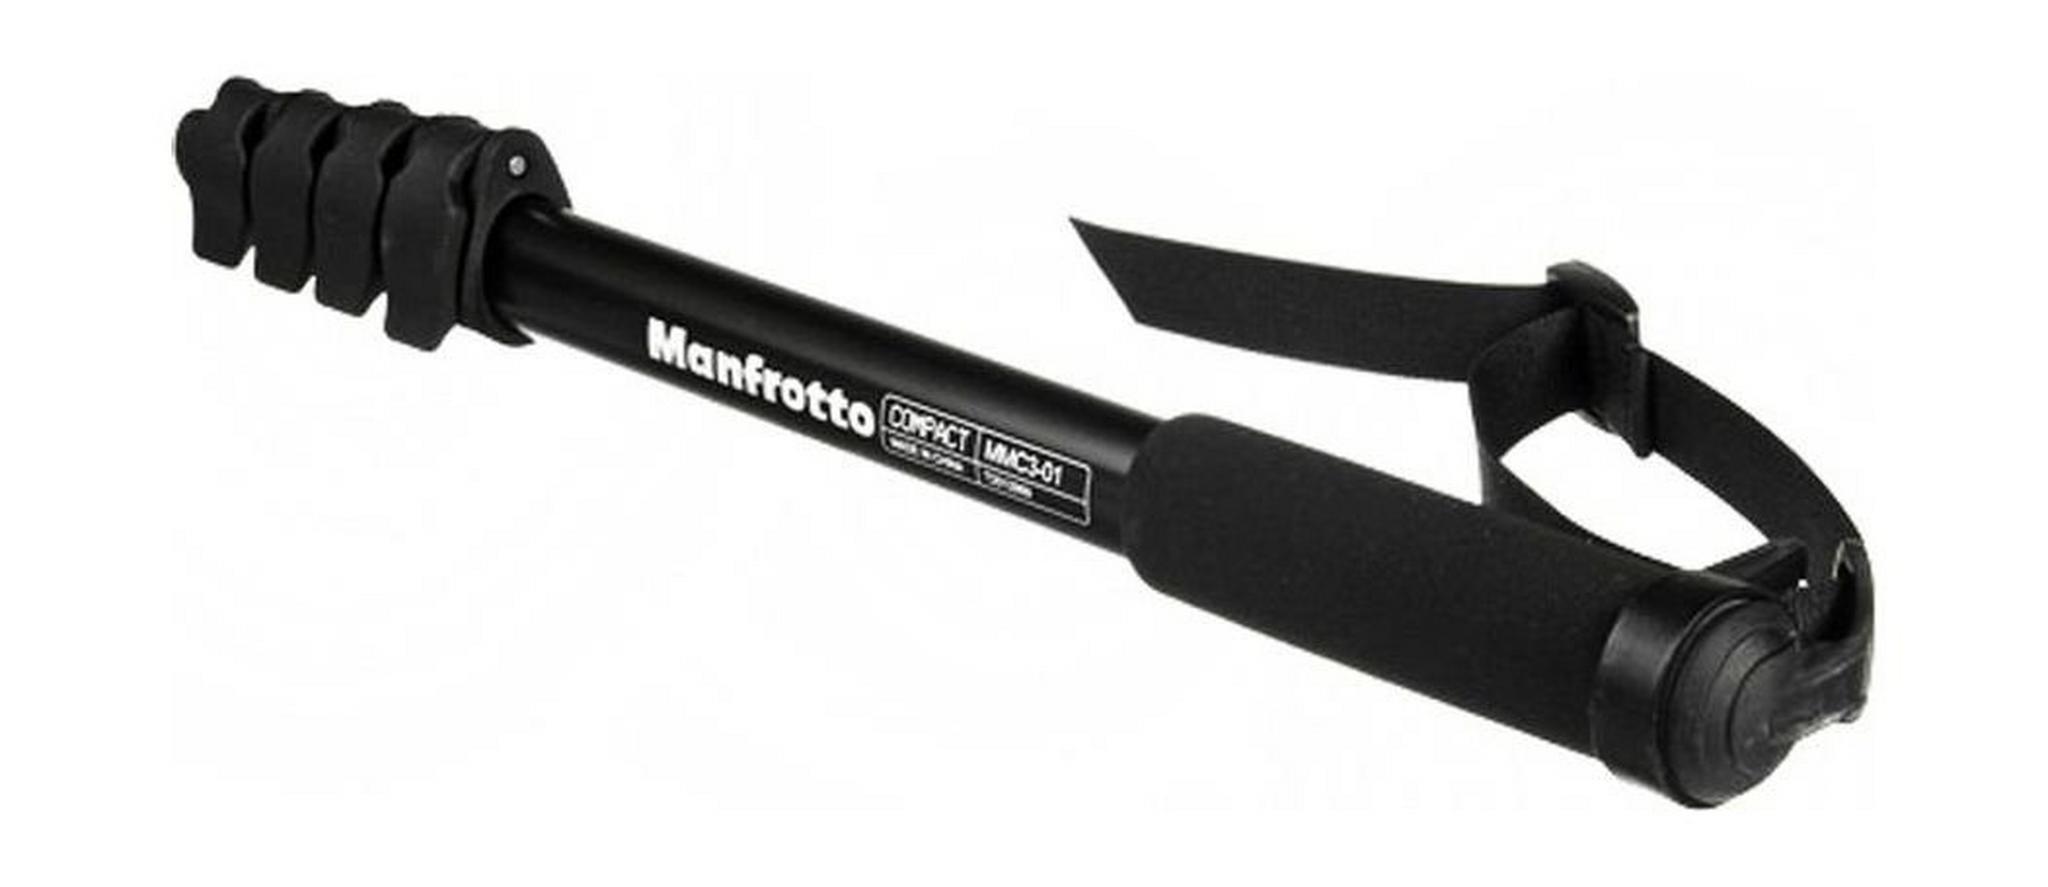 Manfrotto Compact 145.5cm Aluminum Monopod (MMCOMPACT-BK) - Black